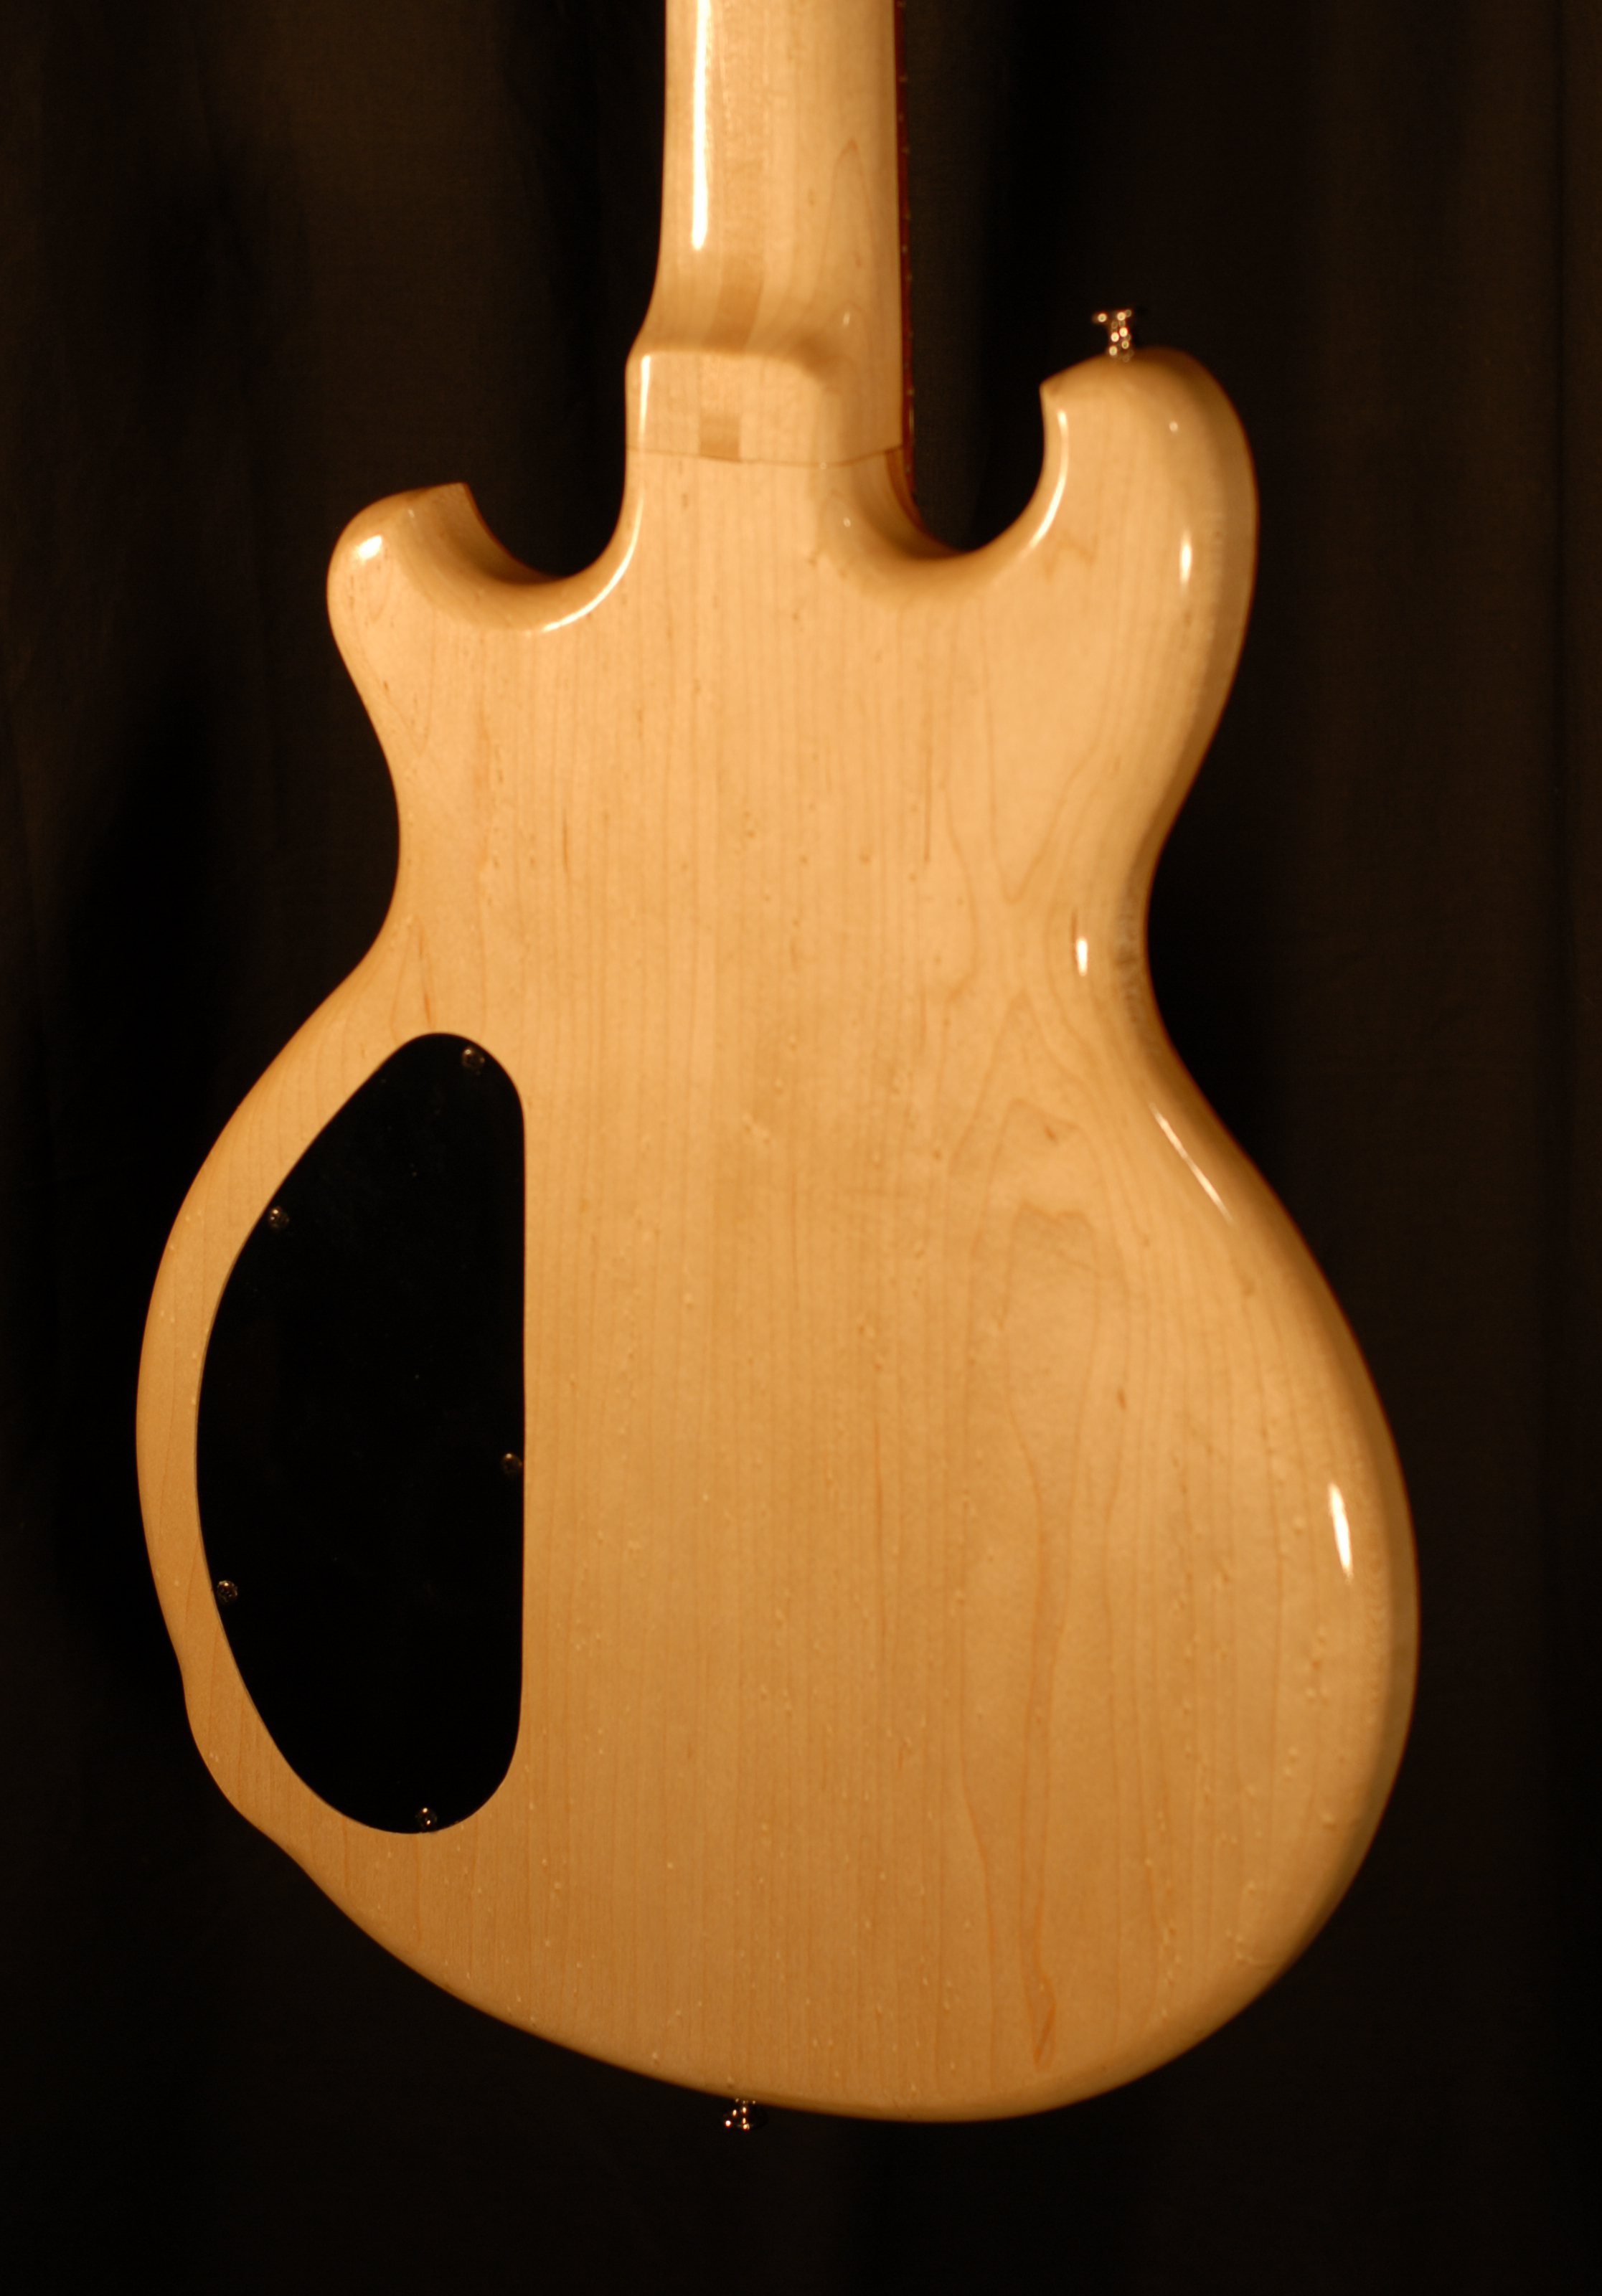 rear body view of michael mccarten's double cutaway Electric 12 string guitar model